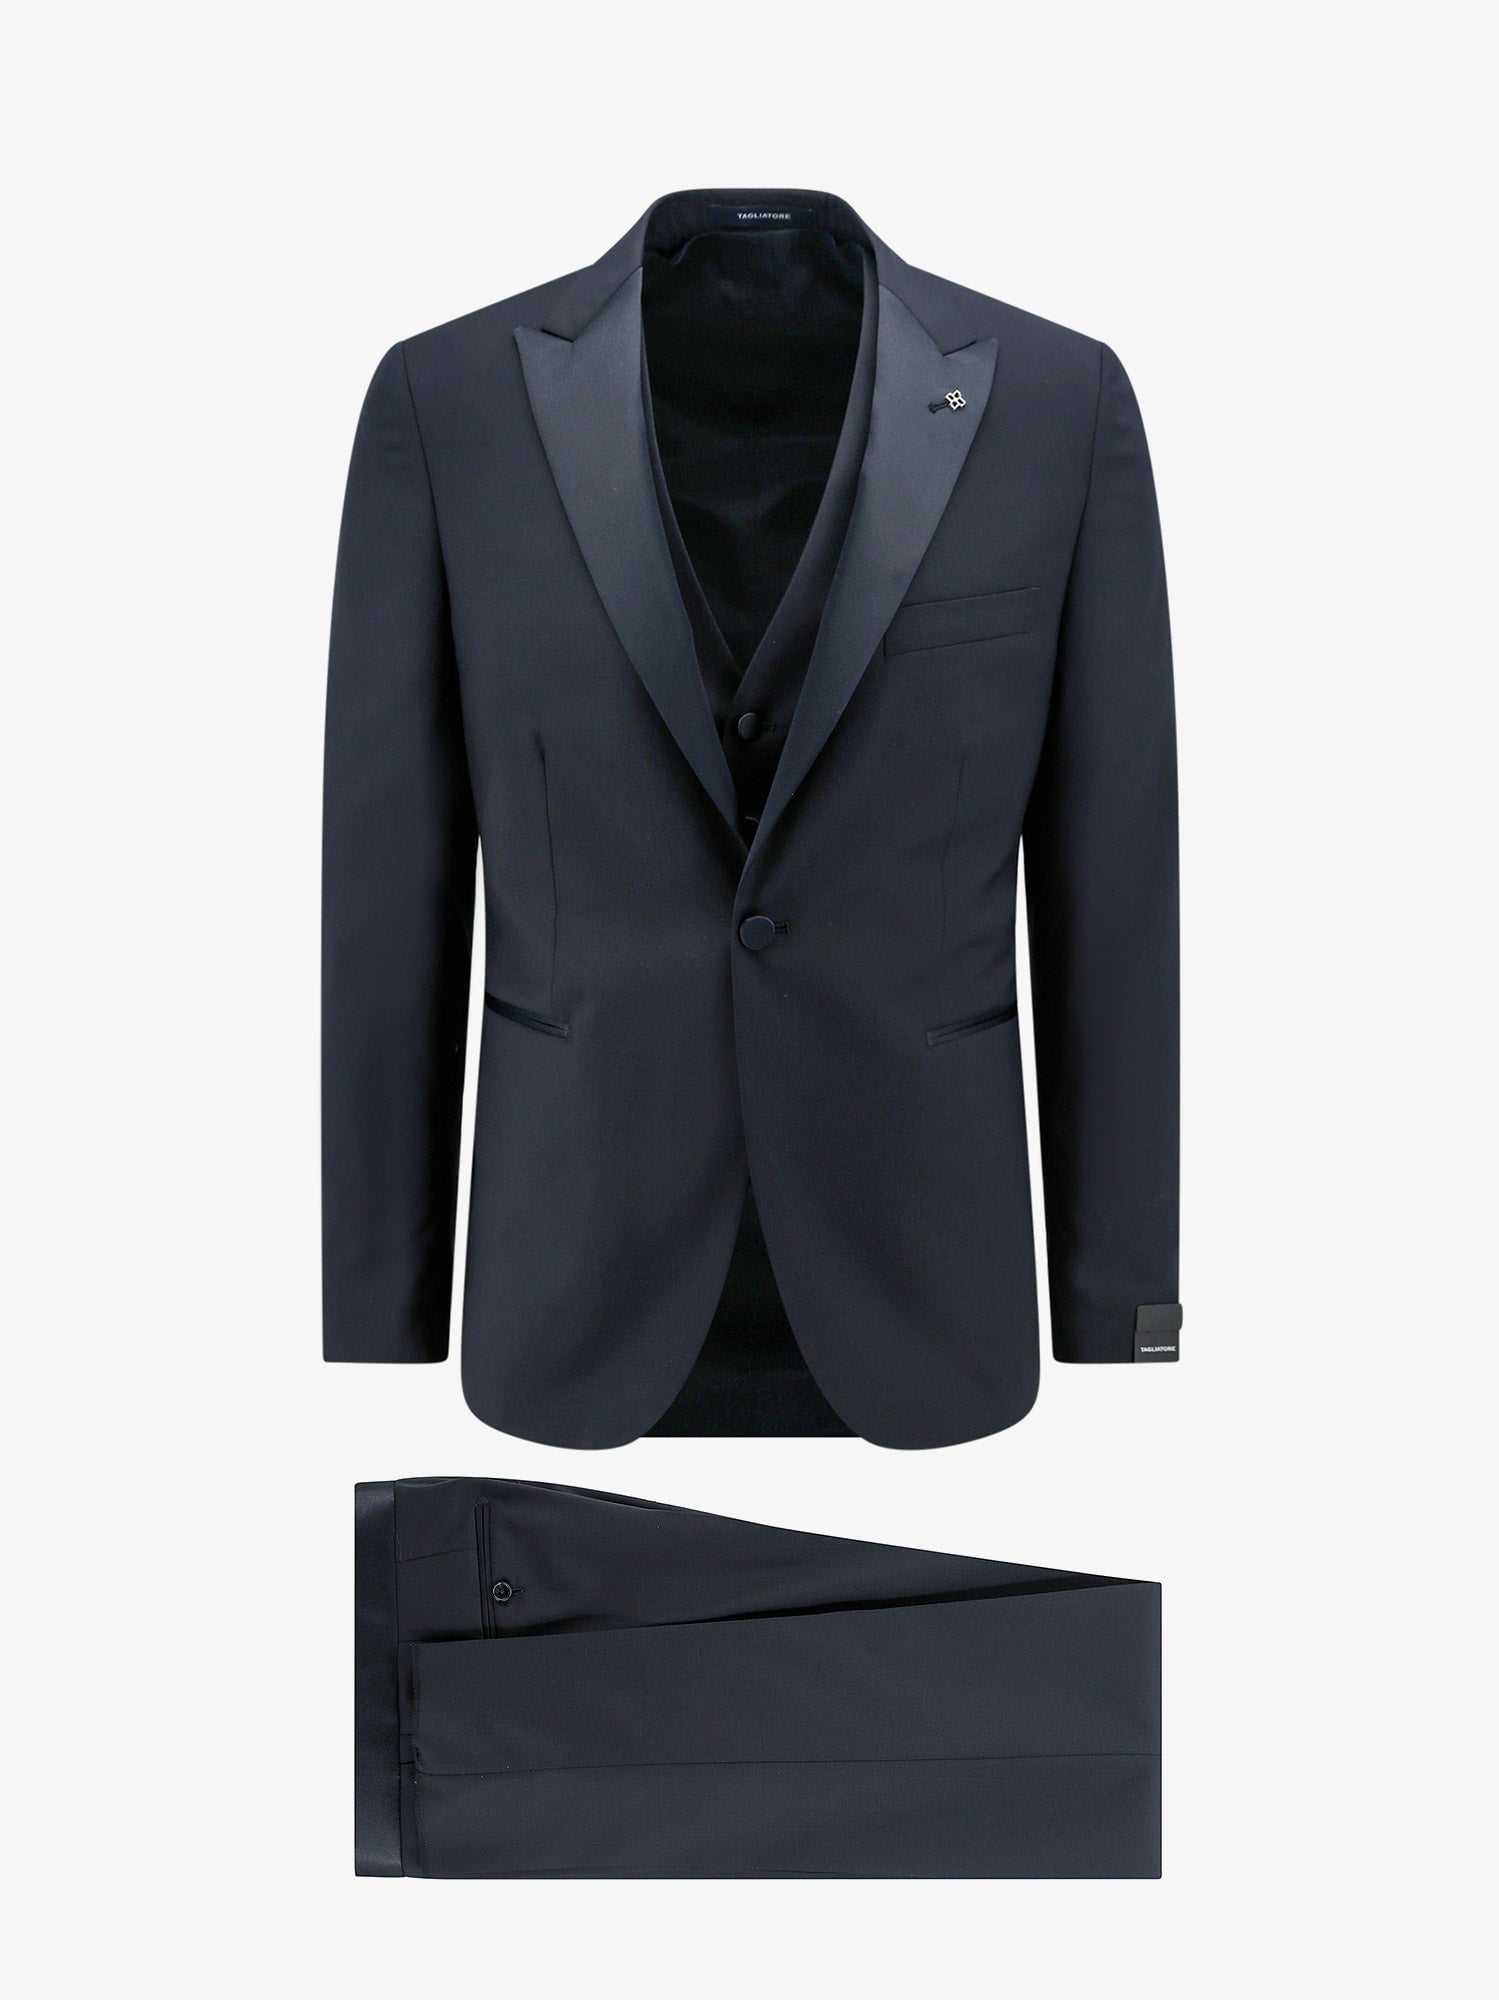 Tagliatore Man Tuxedo Man Blue Suits - Walmart.com